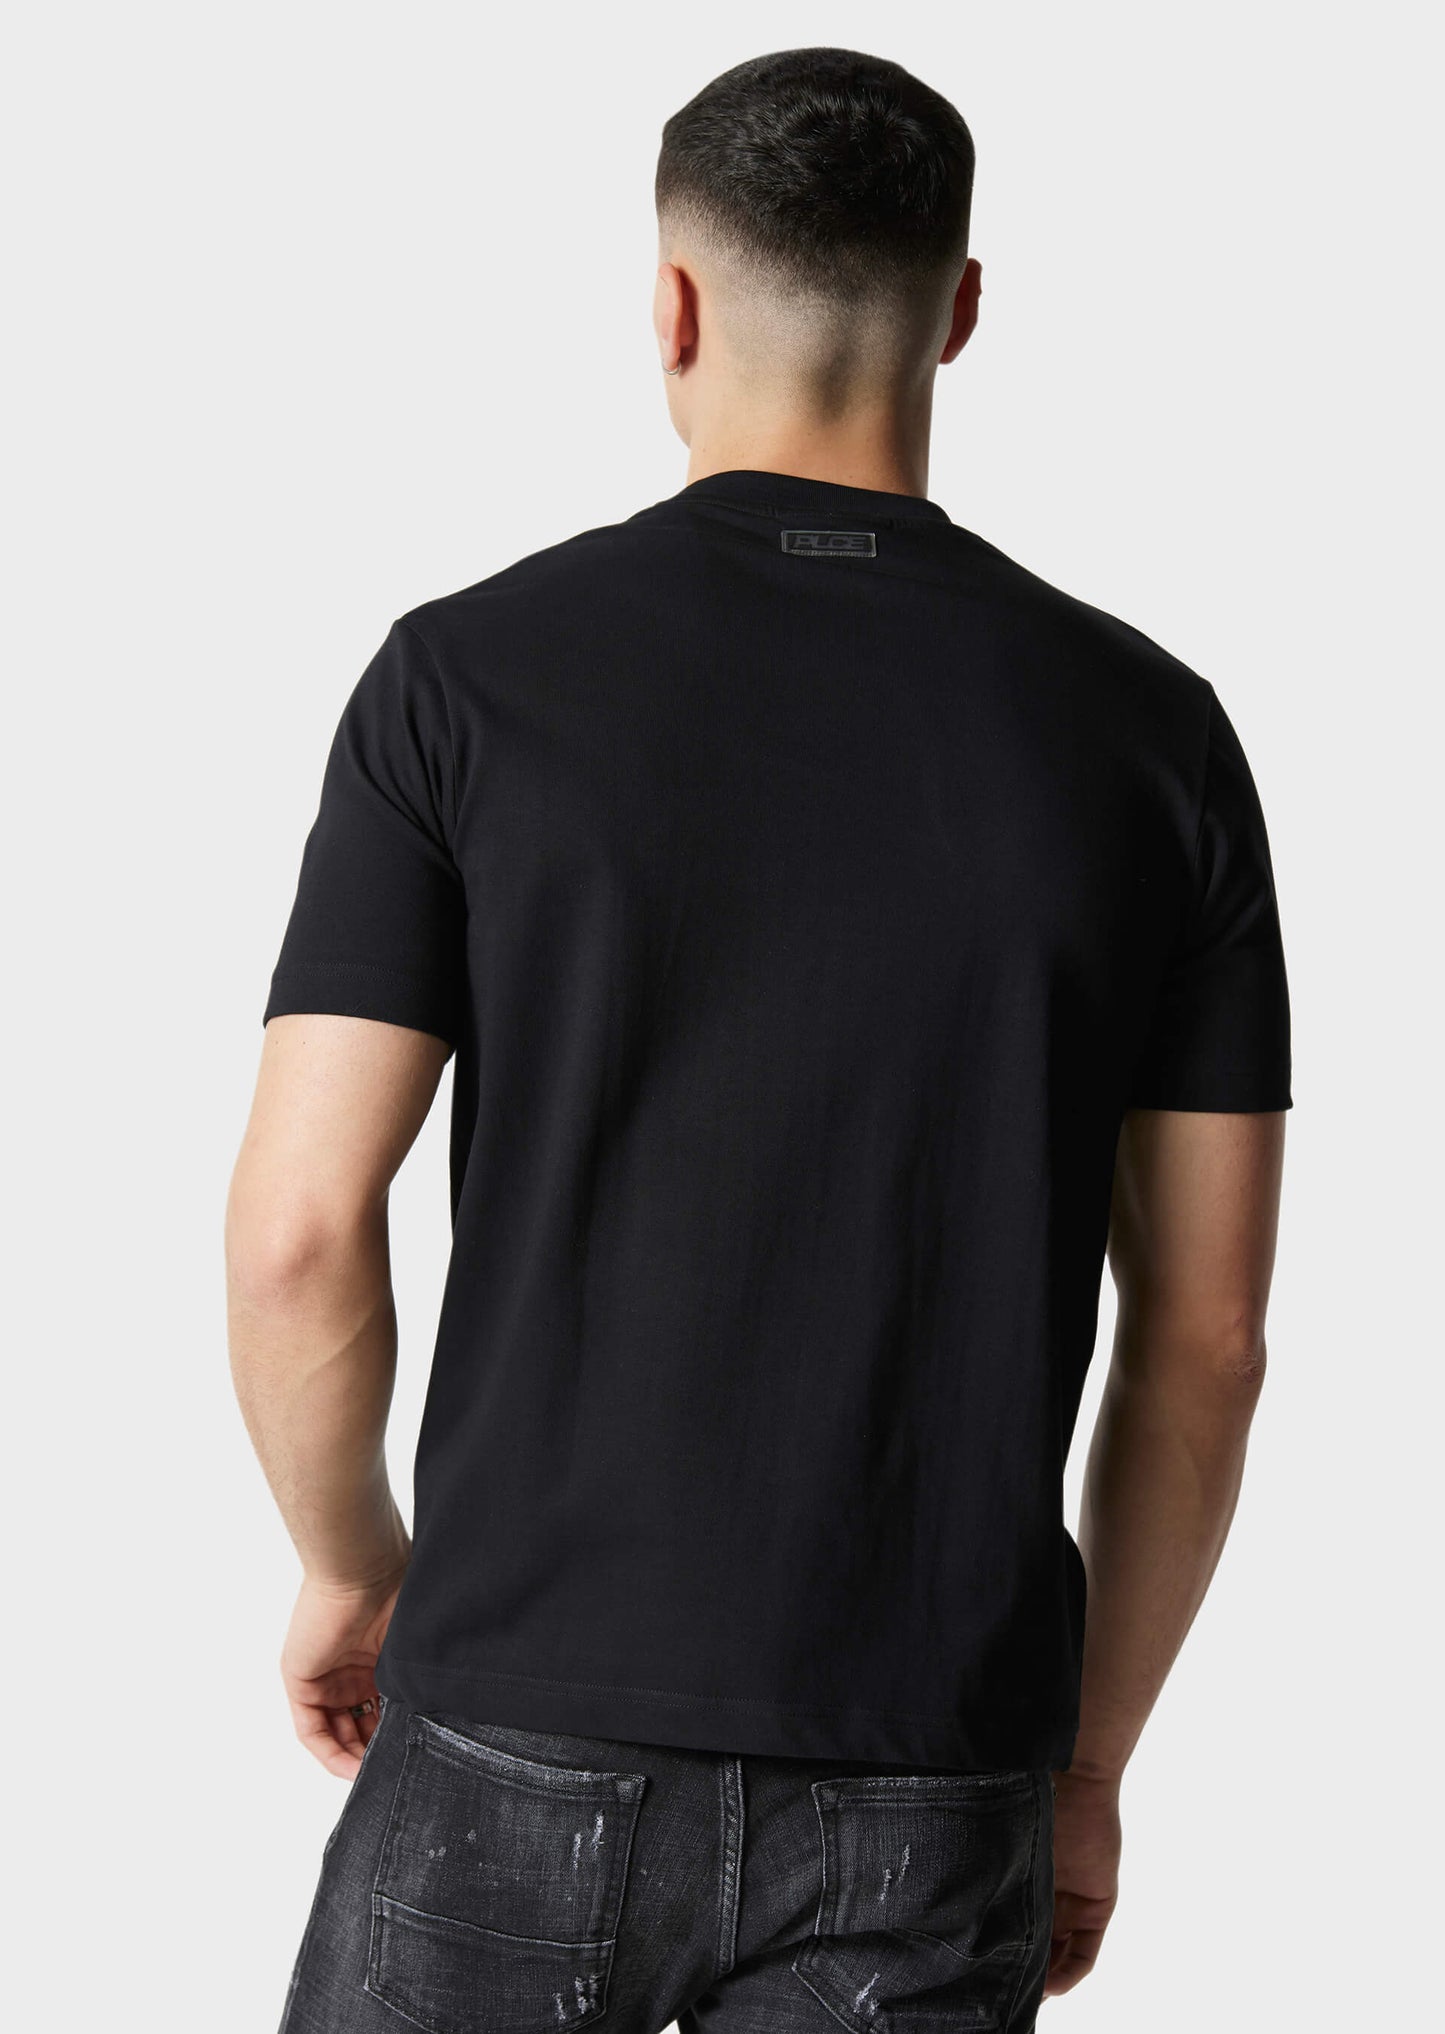 Avoca Black T-Shirt